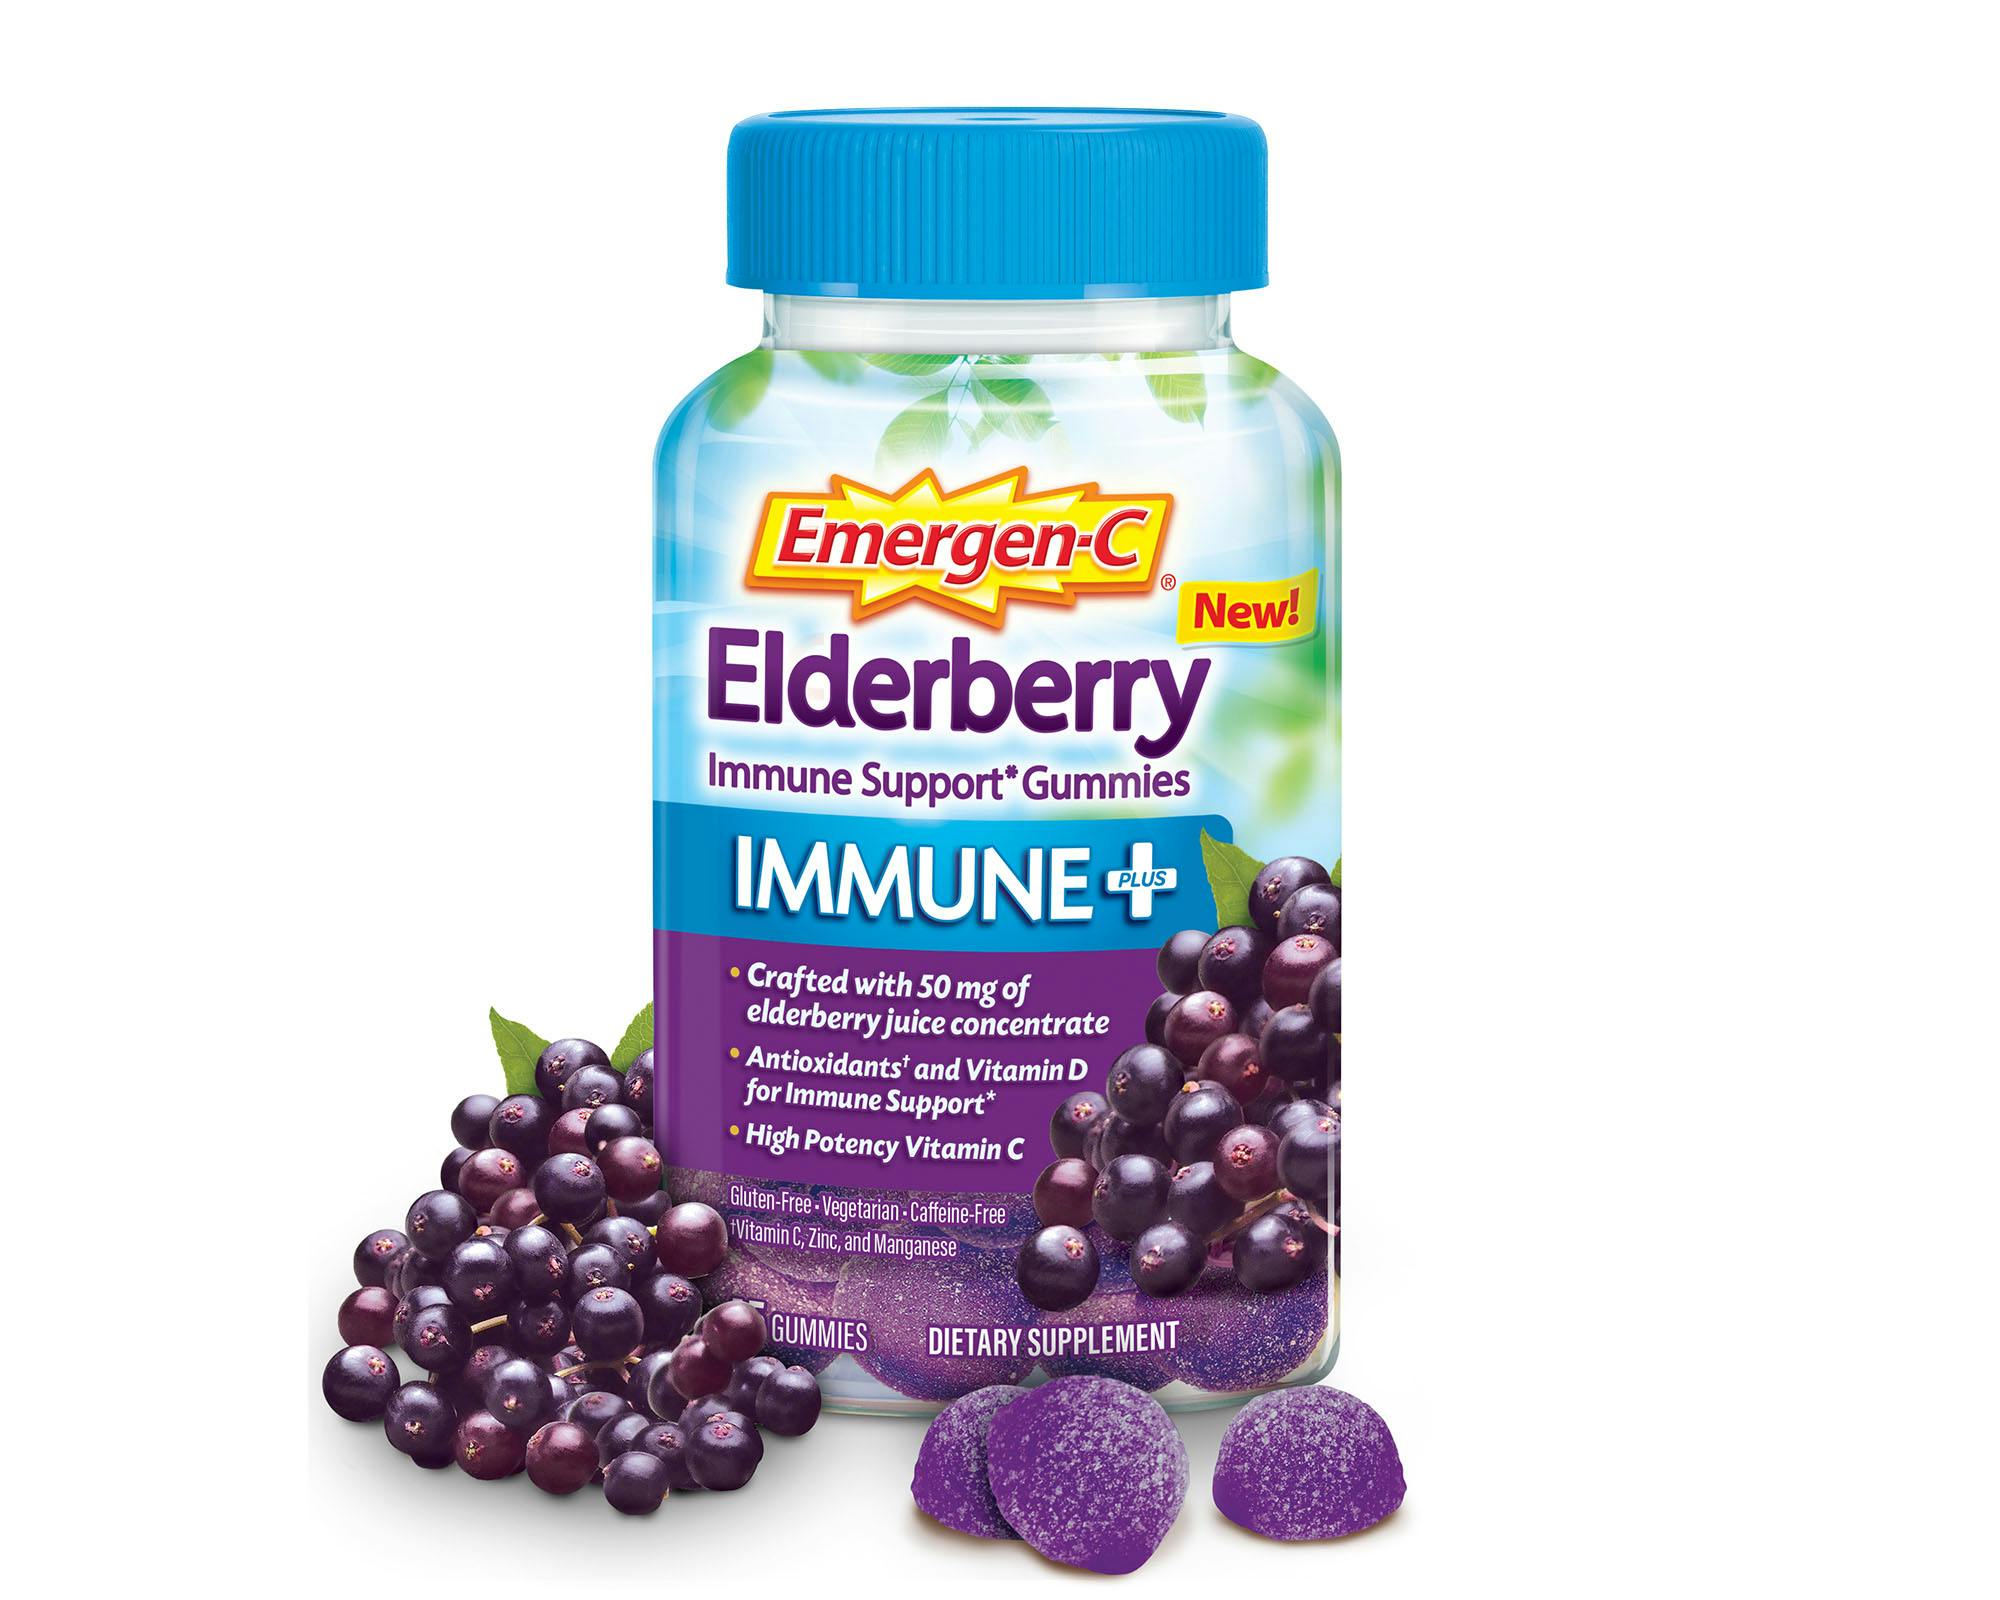 Elderberry Immune+ Support Gummies bottle grouped with elderberries and gummies